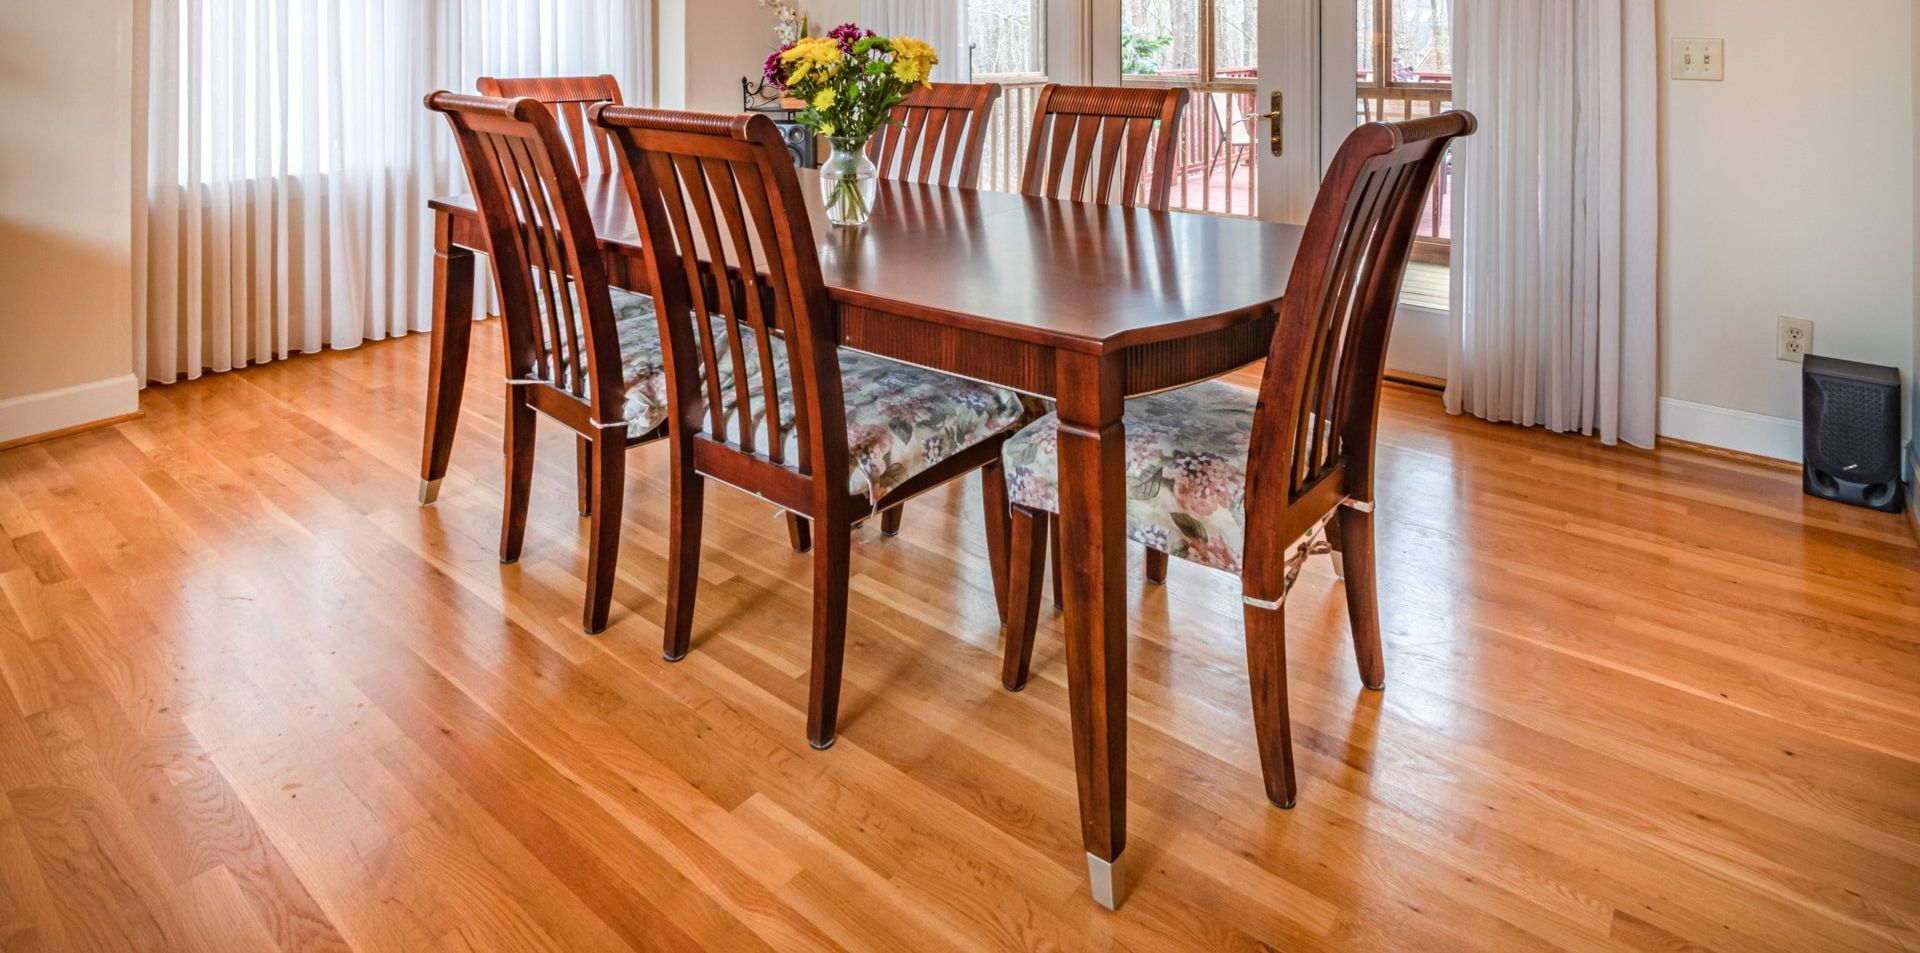 Hardwood flooring in a dining room